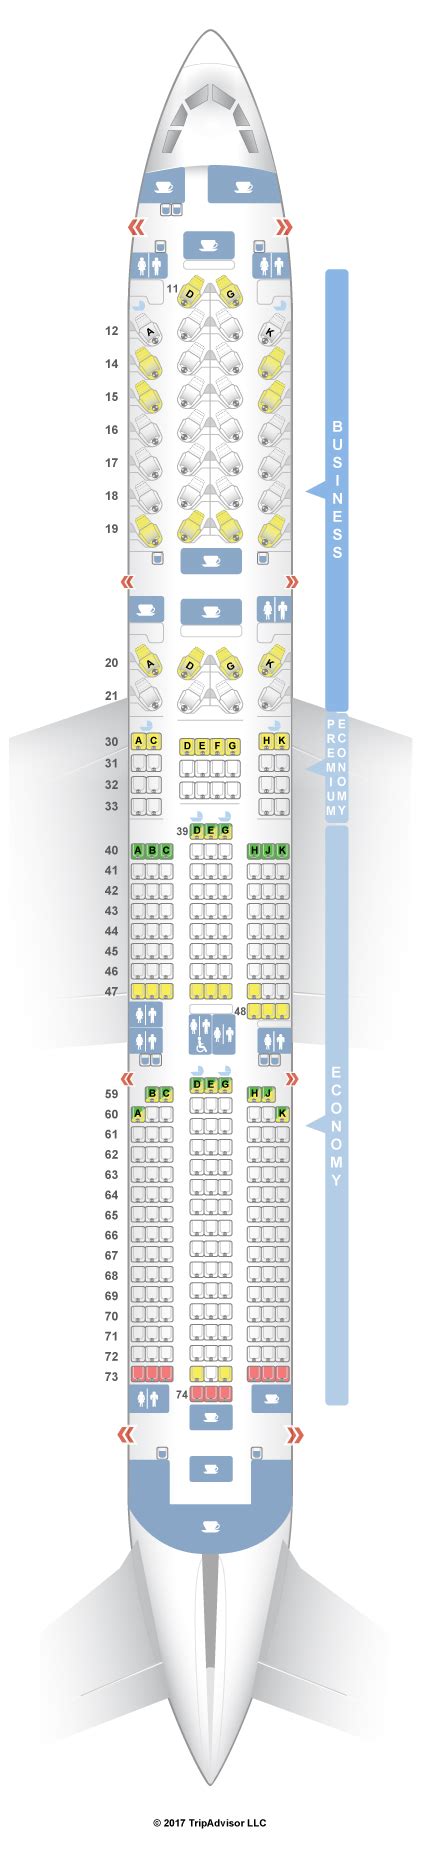 Airbus A350 900 Seat Map Image To U